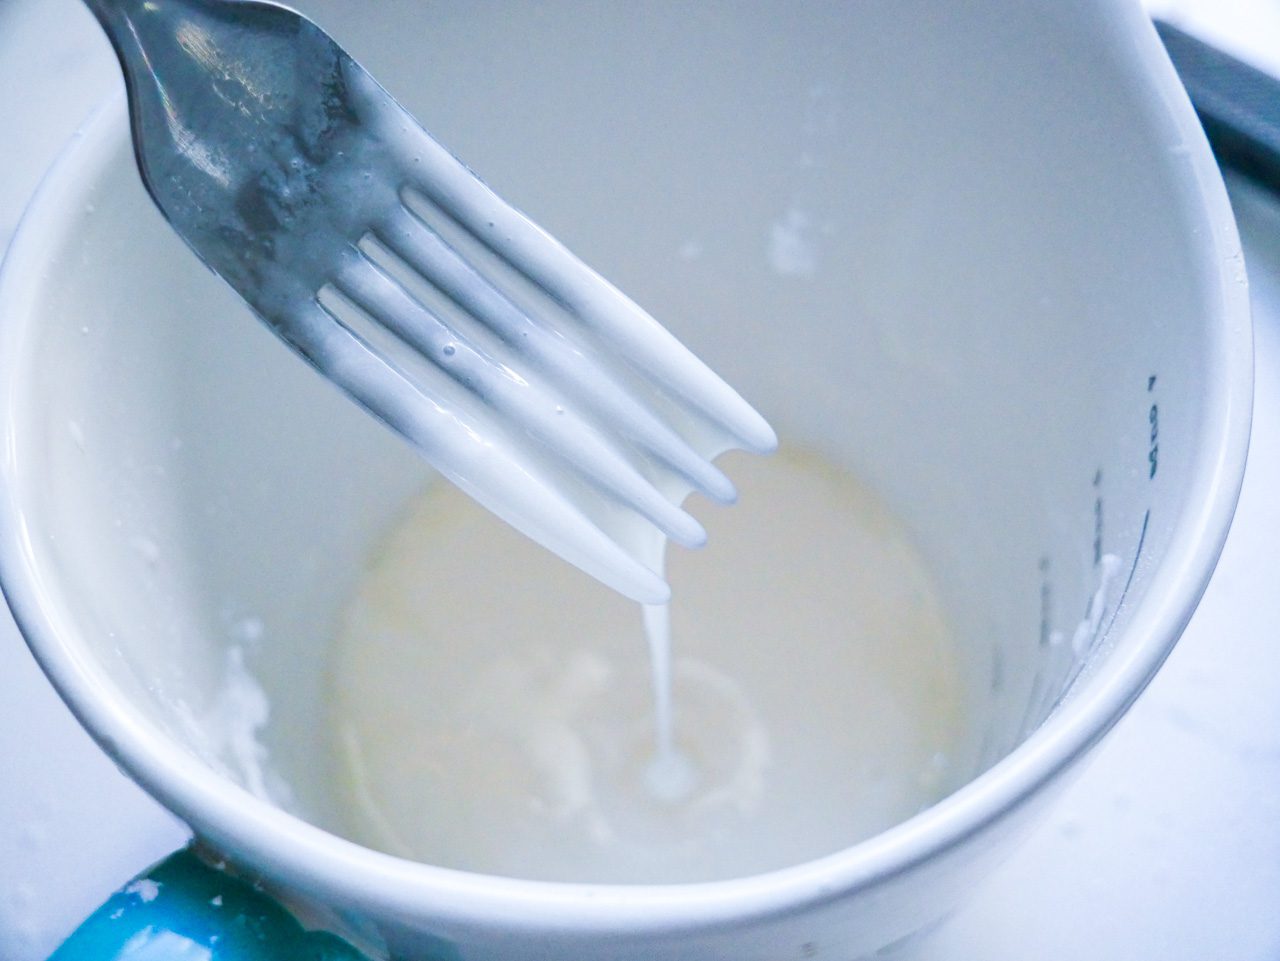 Elderflower glaze on a fork dripping into a liquid measuring cup